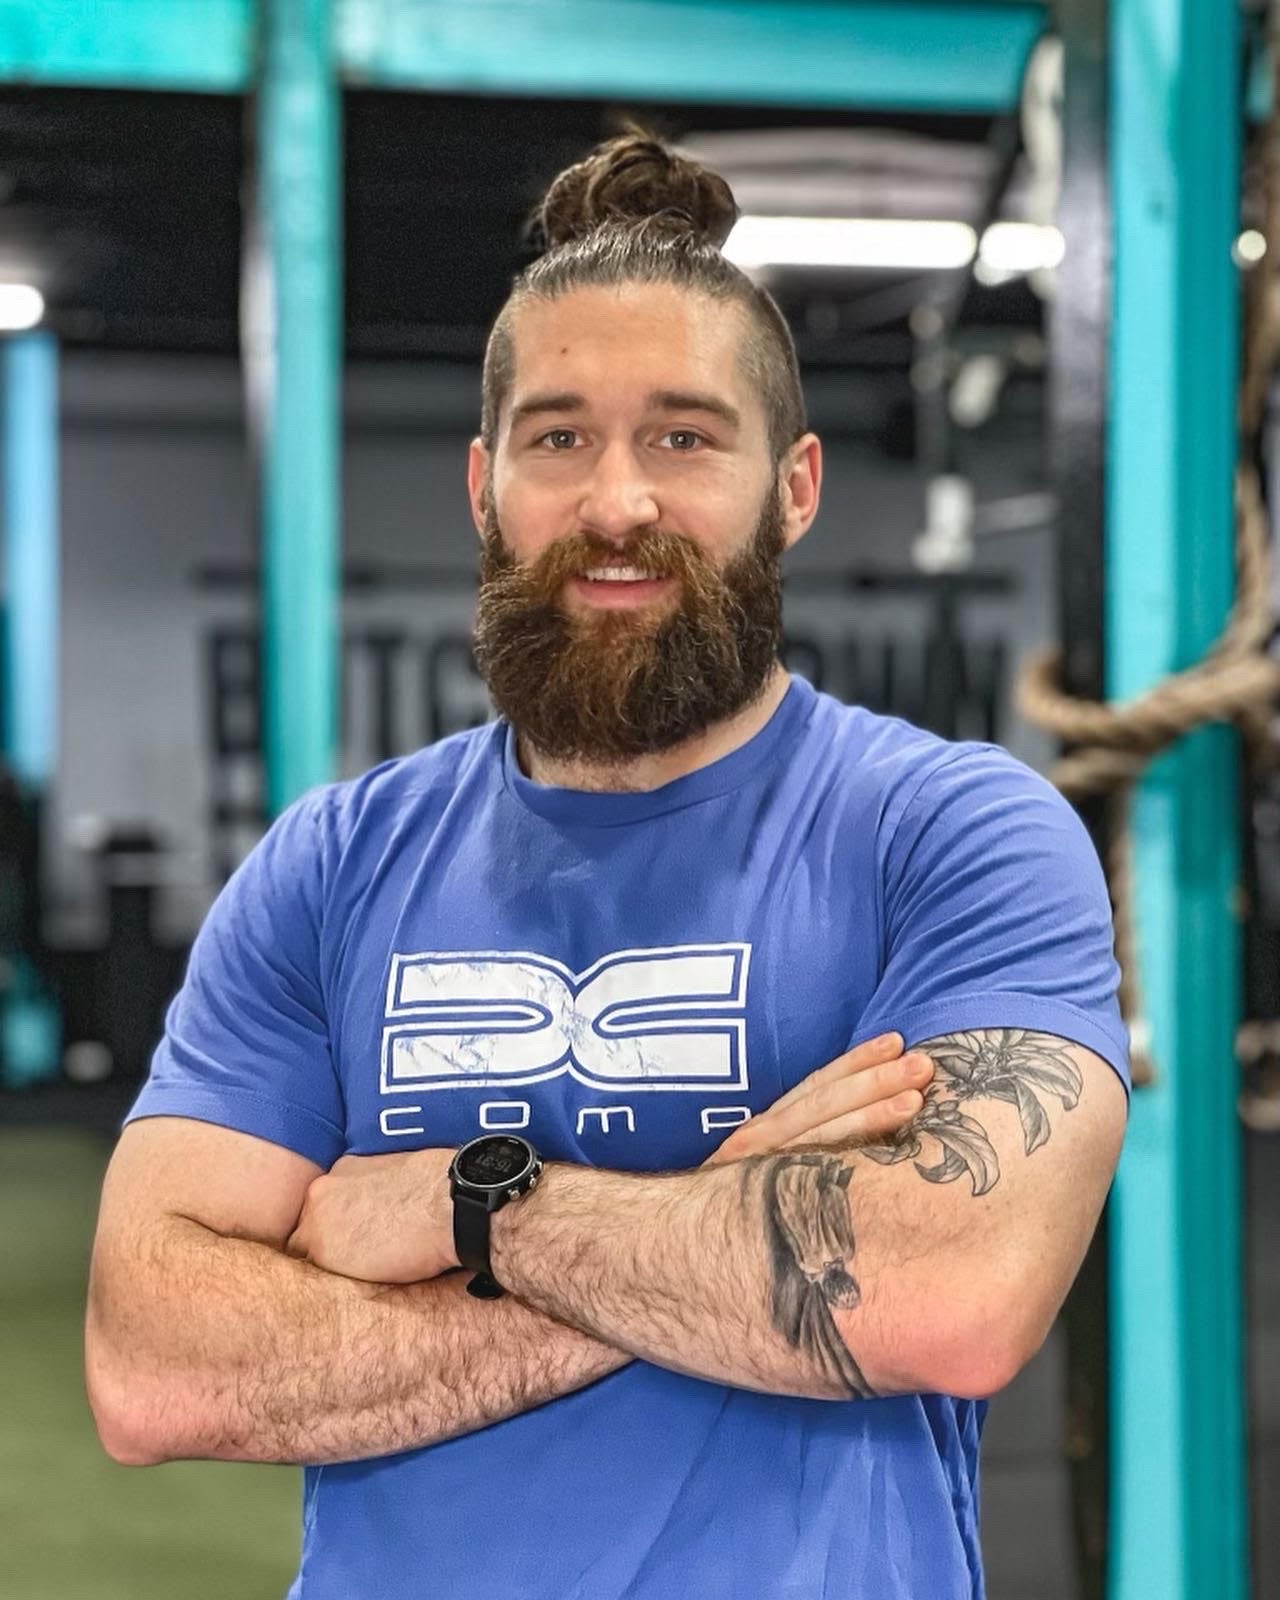 Brendan Snyder in the gym | Men, eating disorders, and diabetes